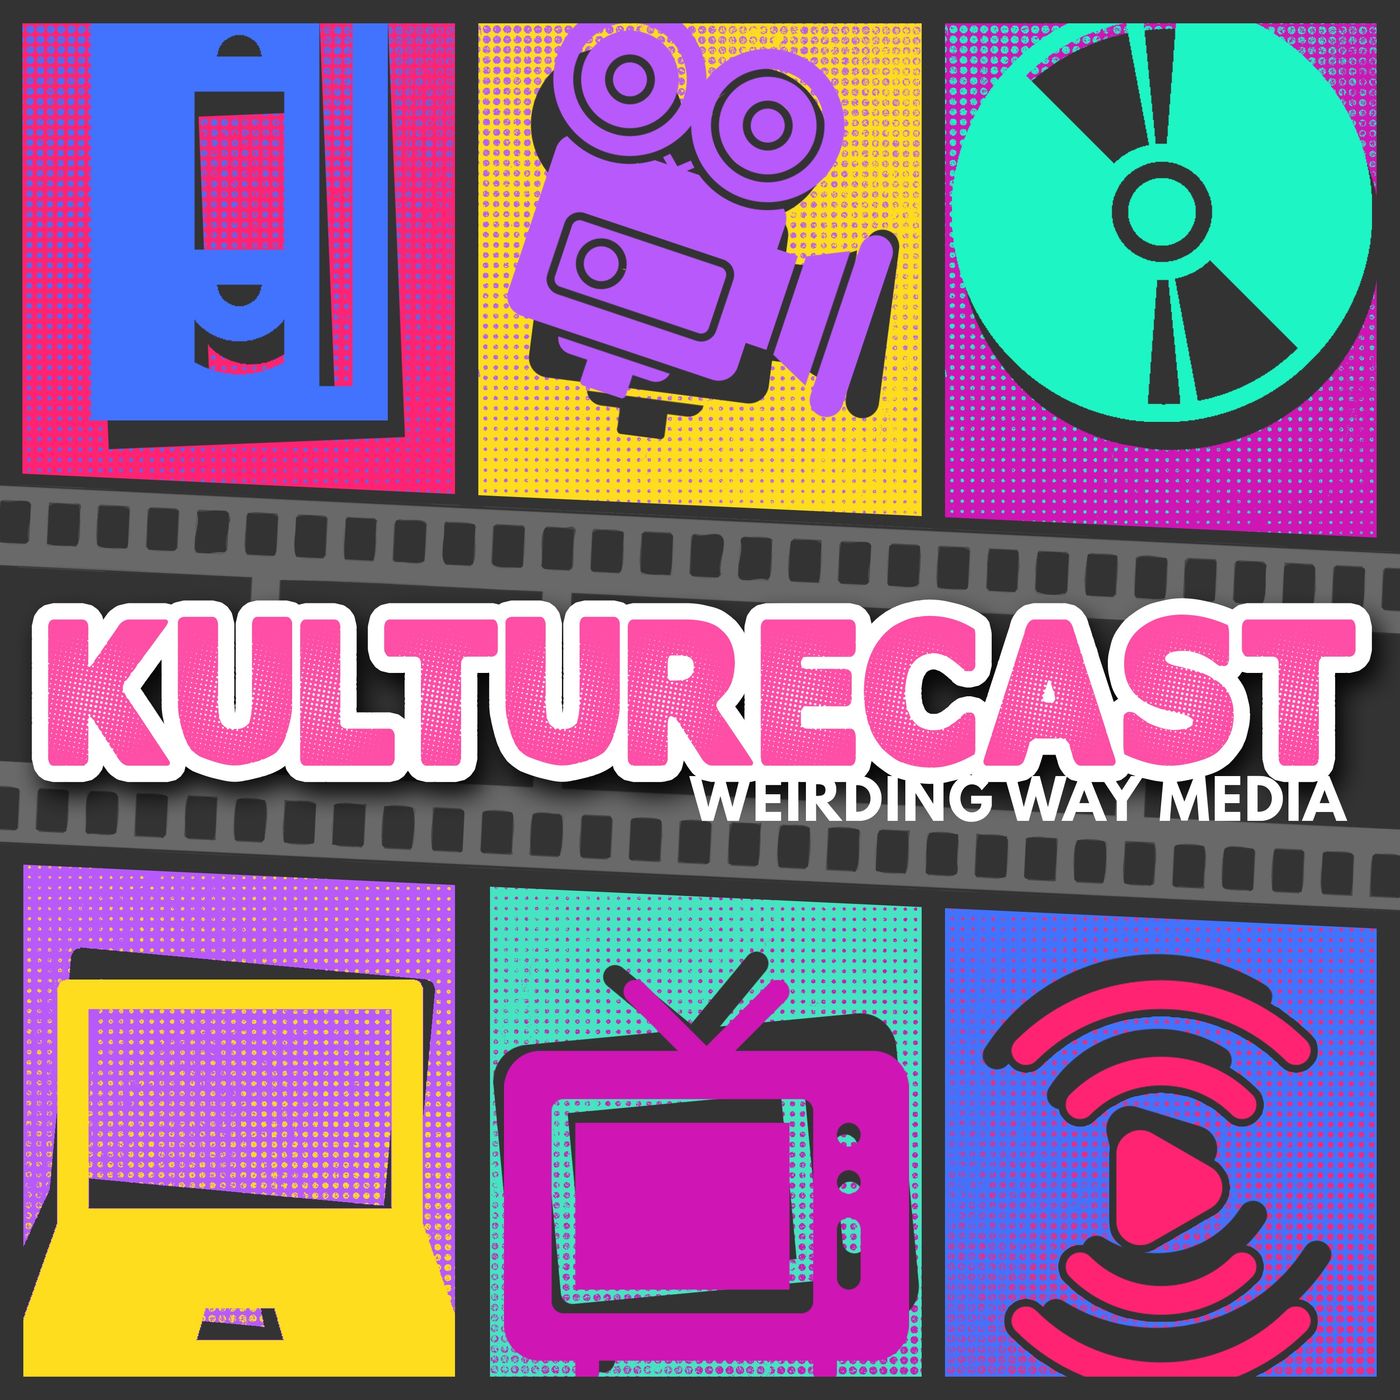 The Kulturecast